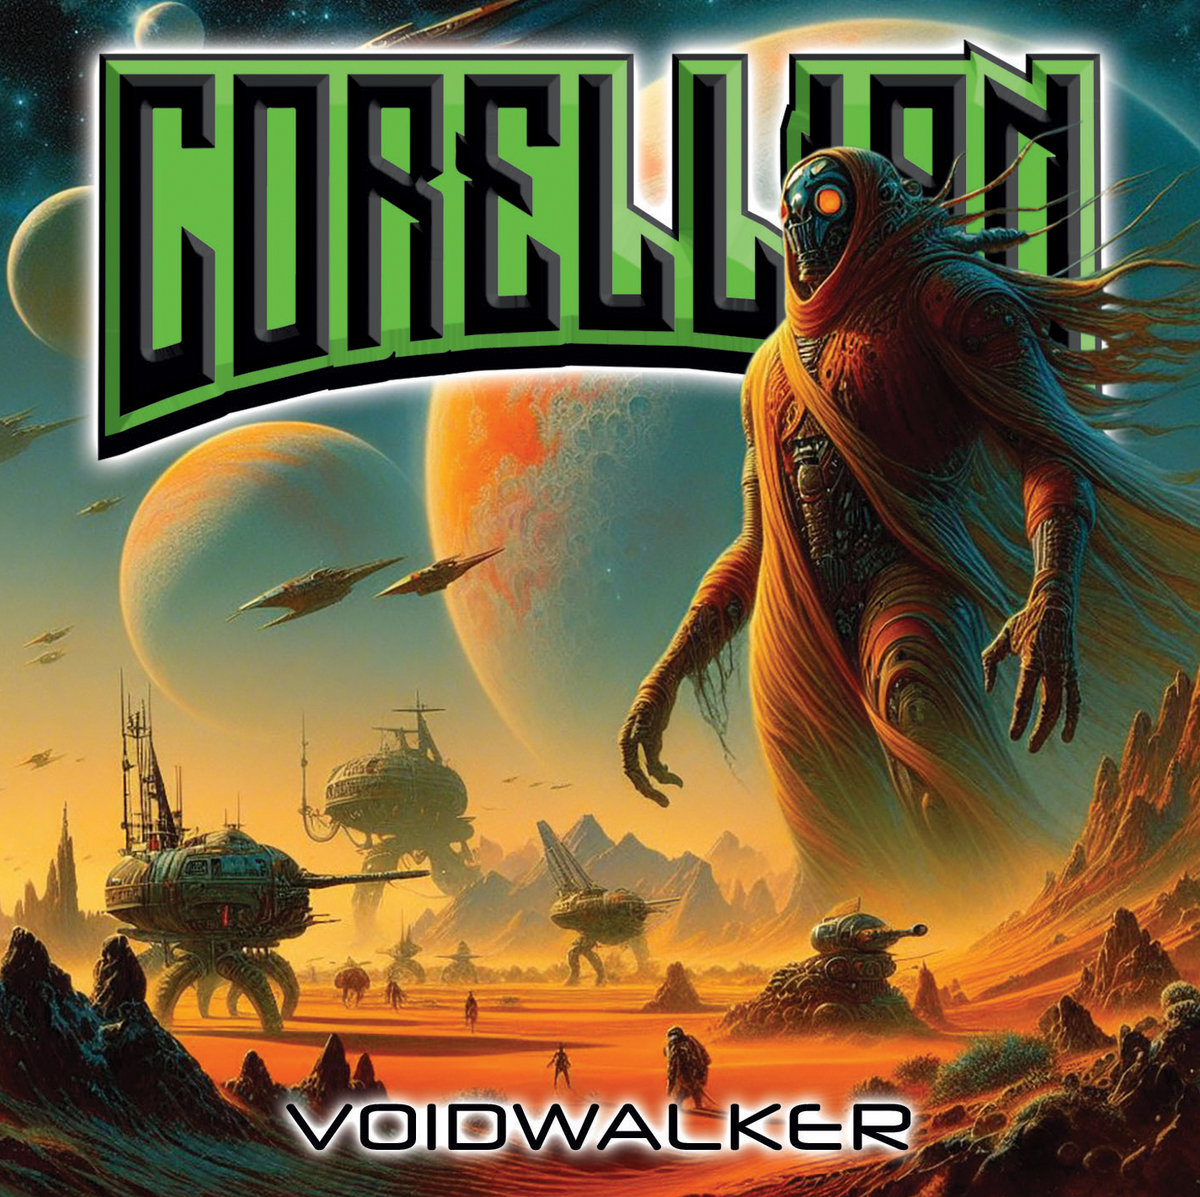 Album Review: Voidwalker by Corellian